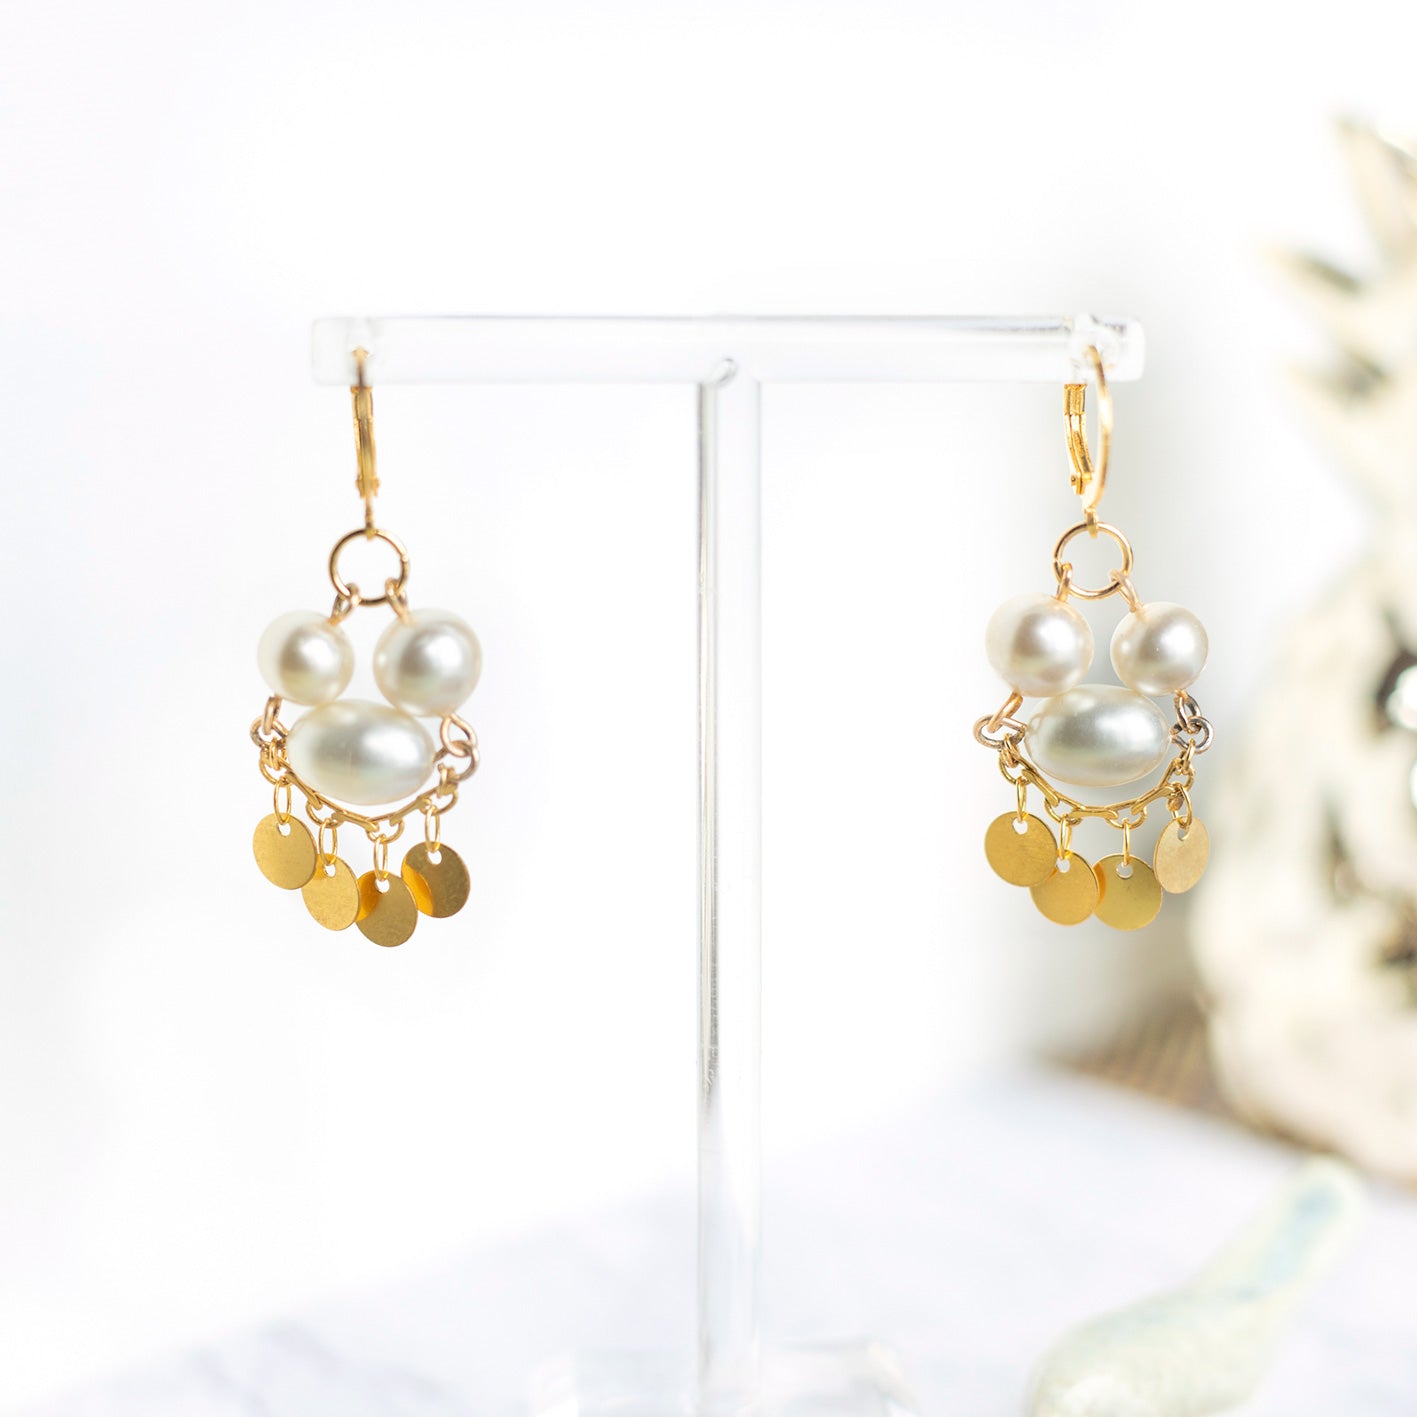 White glass bead earrings